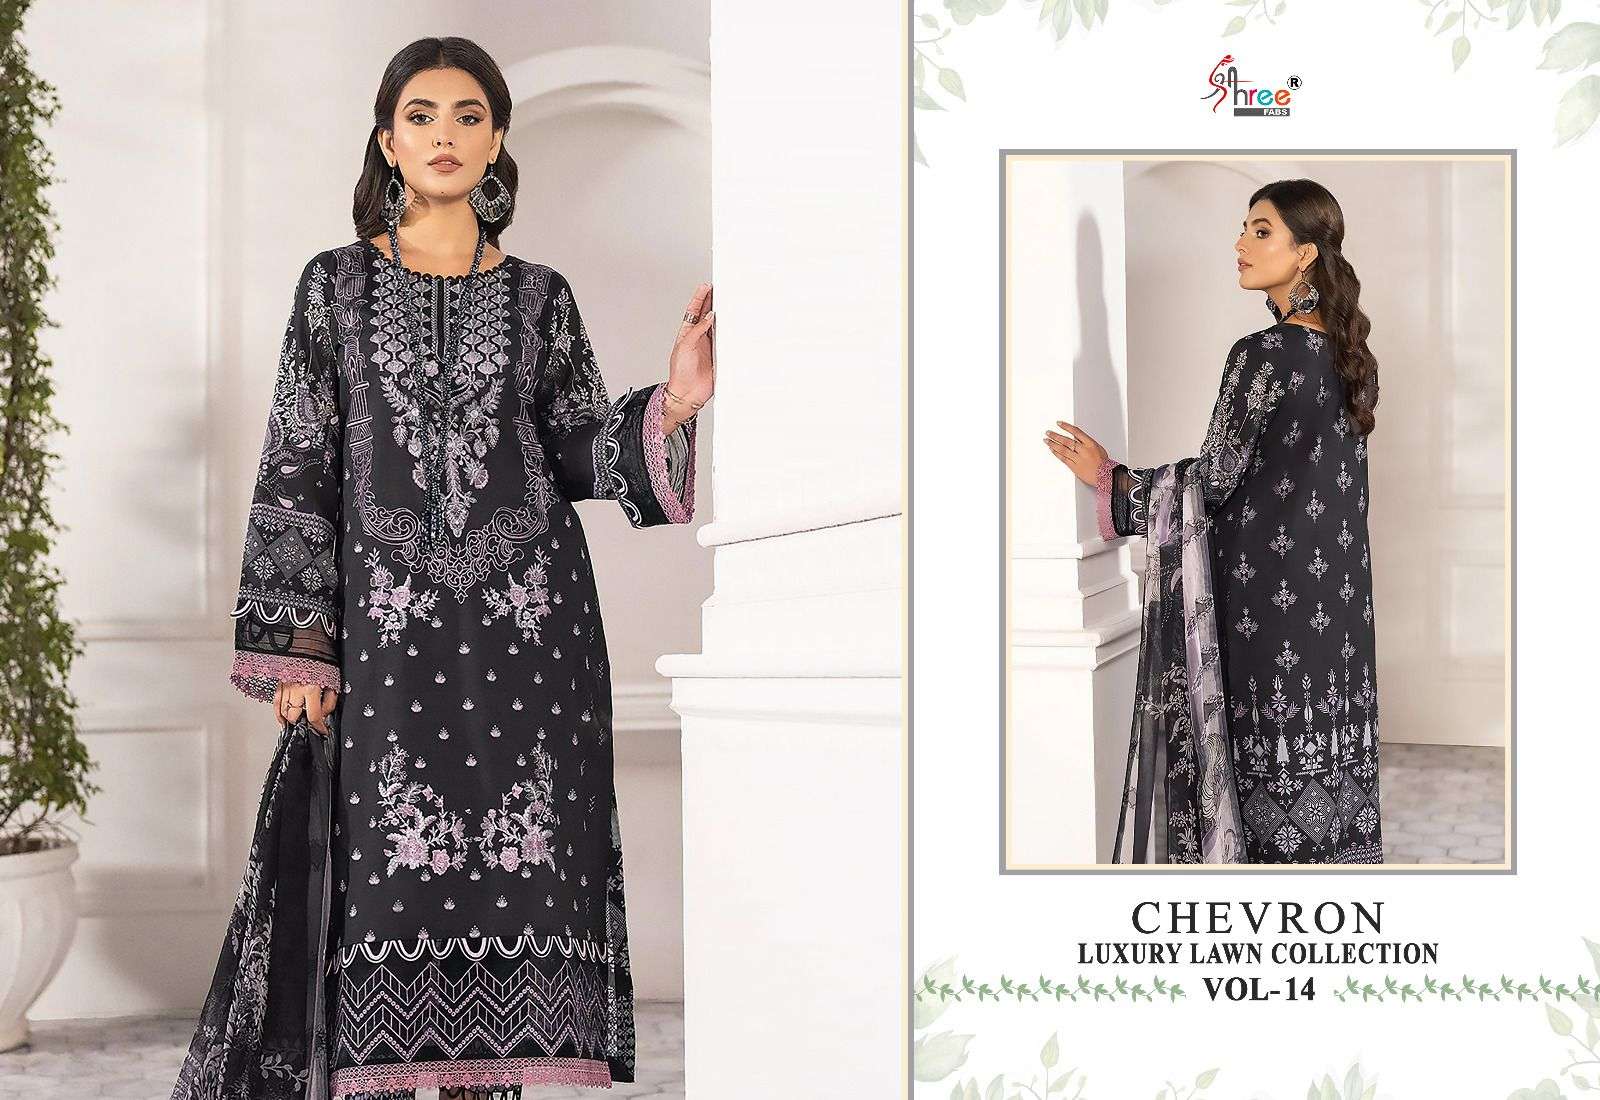 shree fabs chevron vol-14 3028-3035 series trendy designer pakistani salwar kameez catalogue wholesale rates in surat 